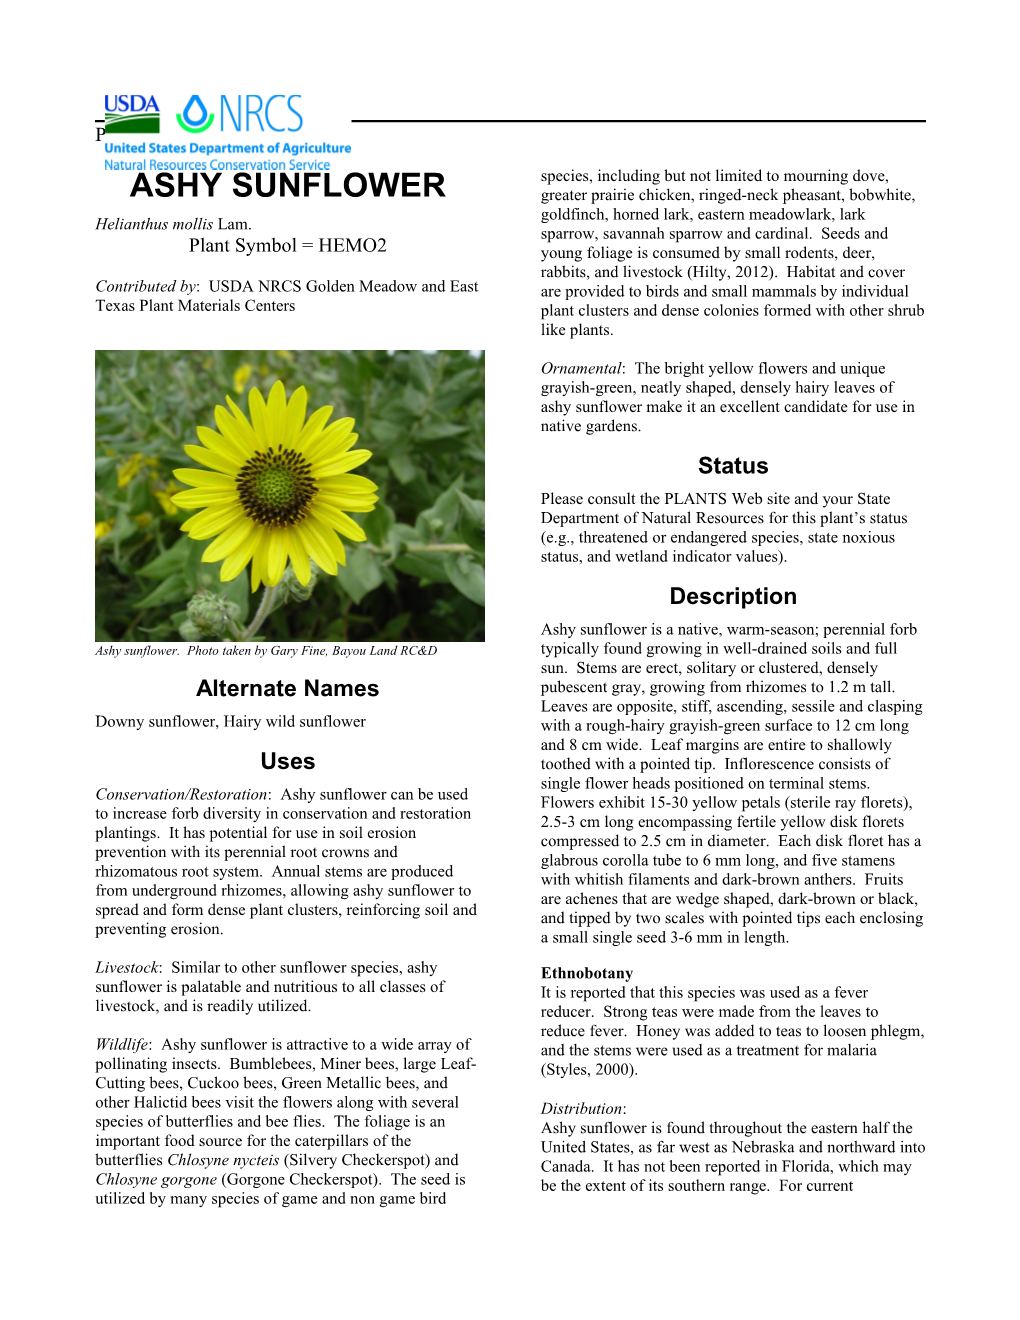 Ashy Sunflower, (Helianthus Mollis Lam.) Plant Guide